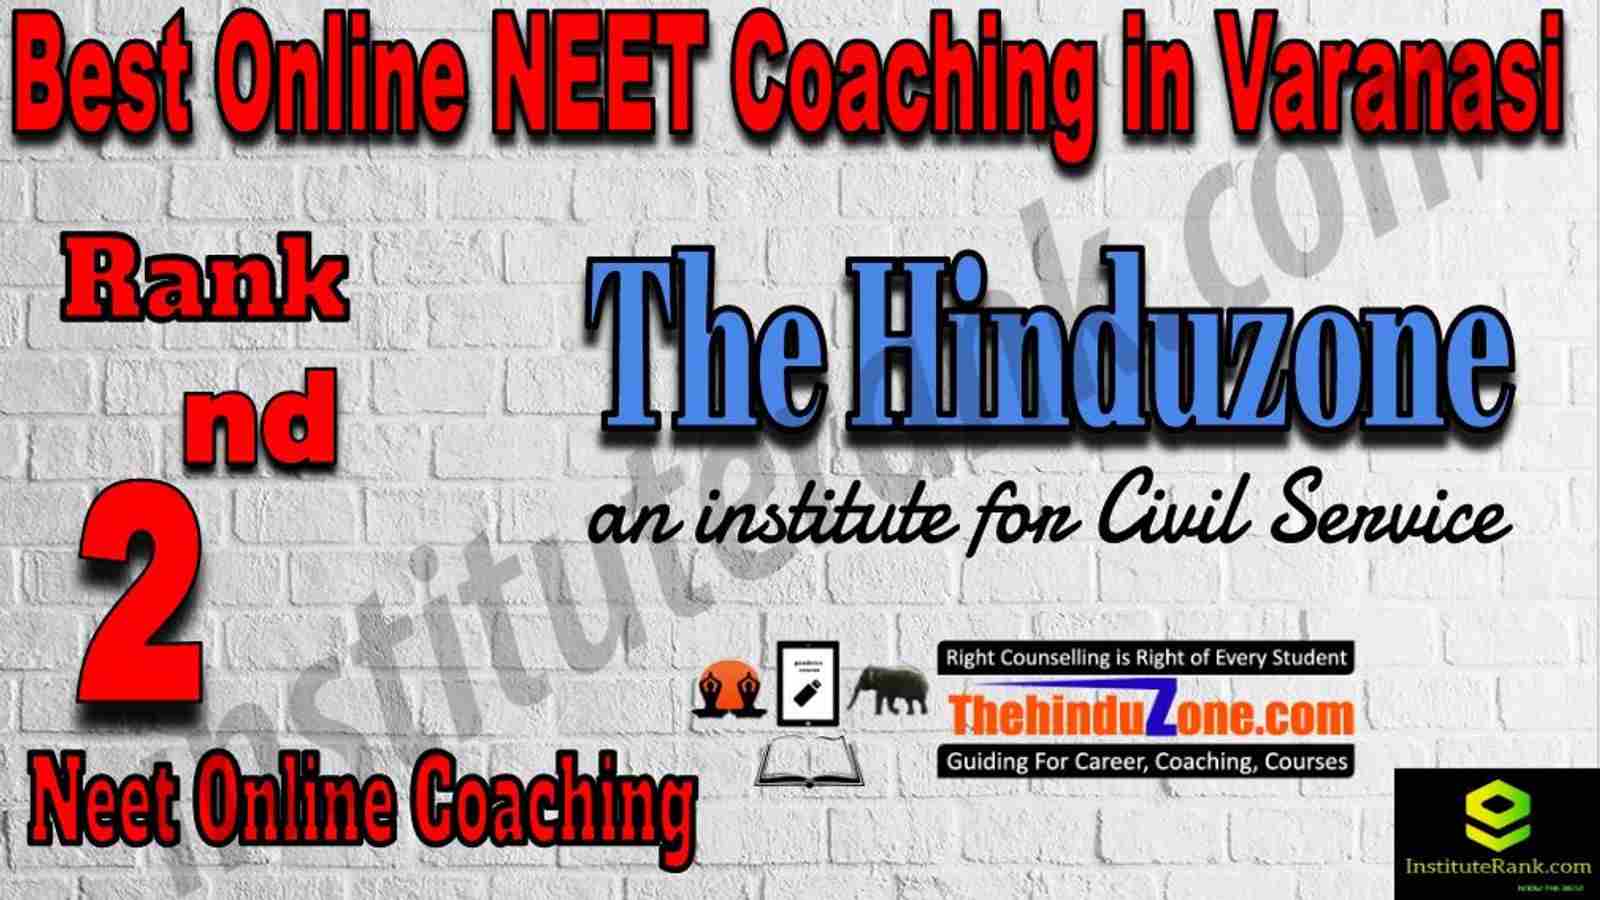 2nd Best Online Neet Coaching in Varanasi